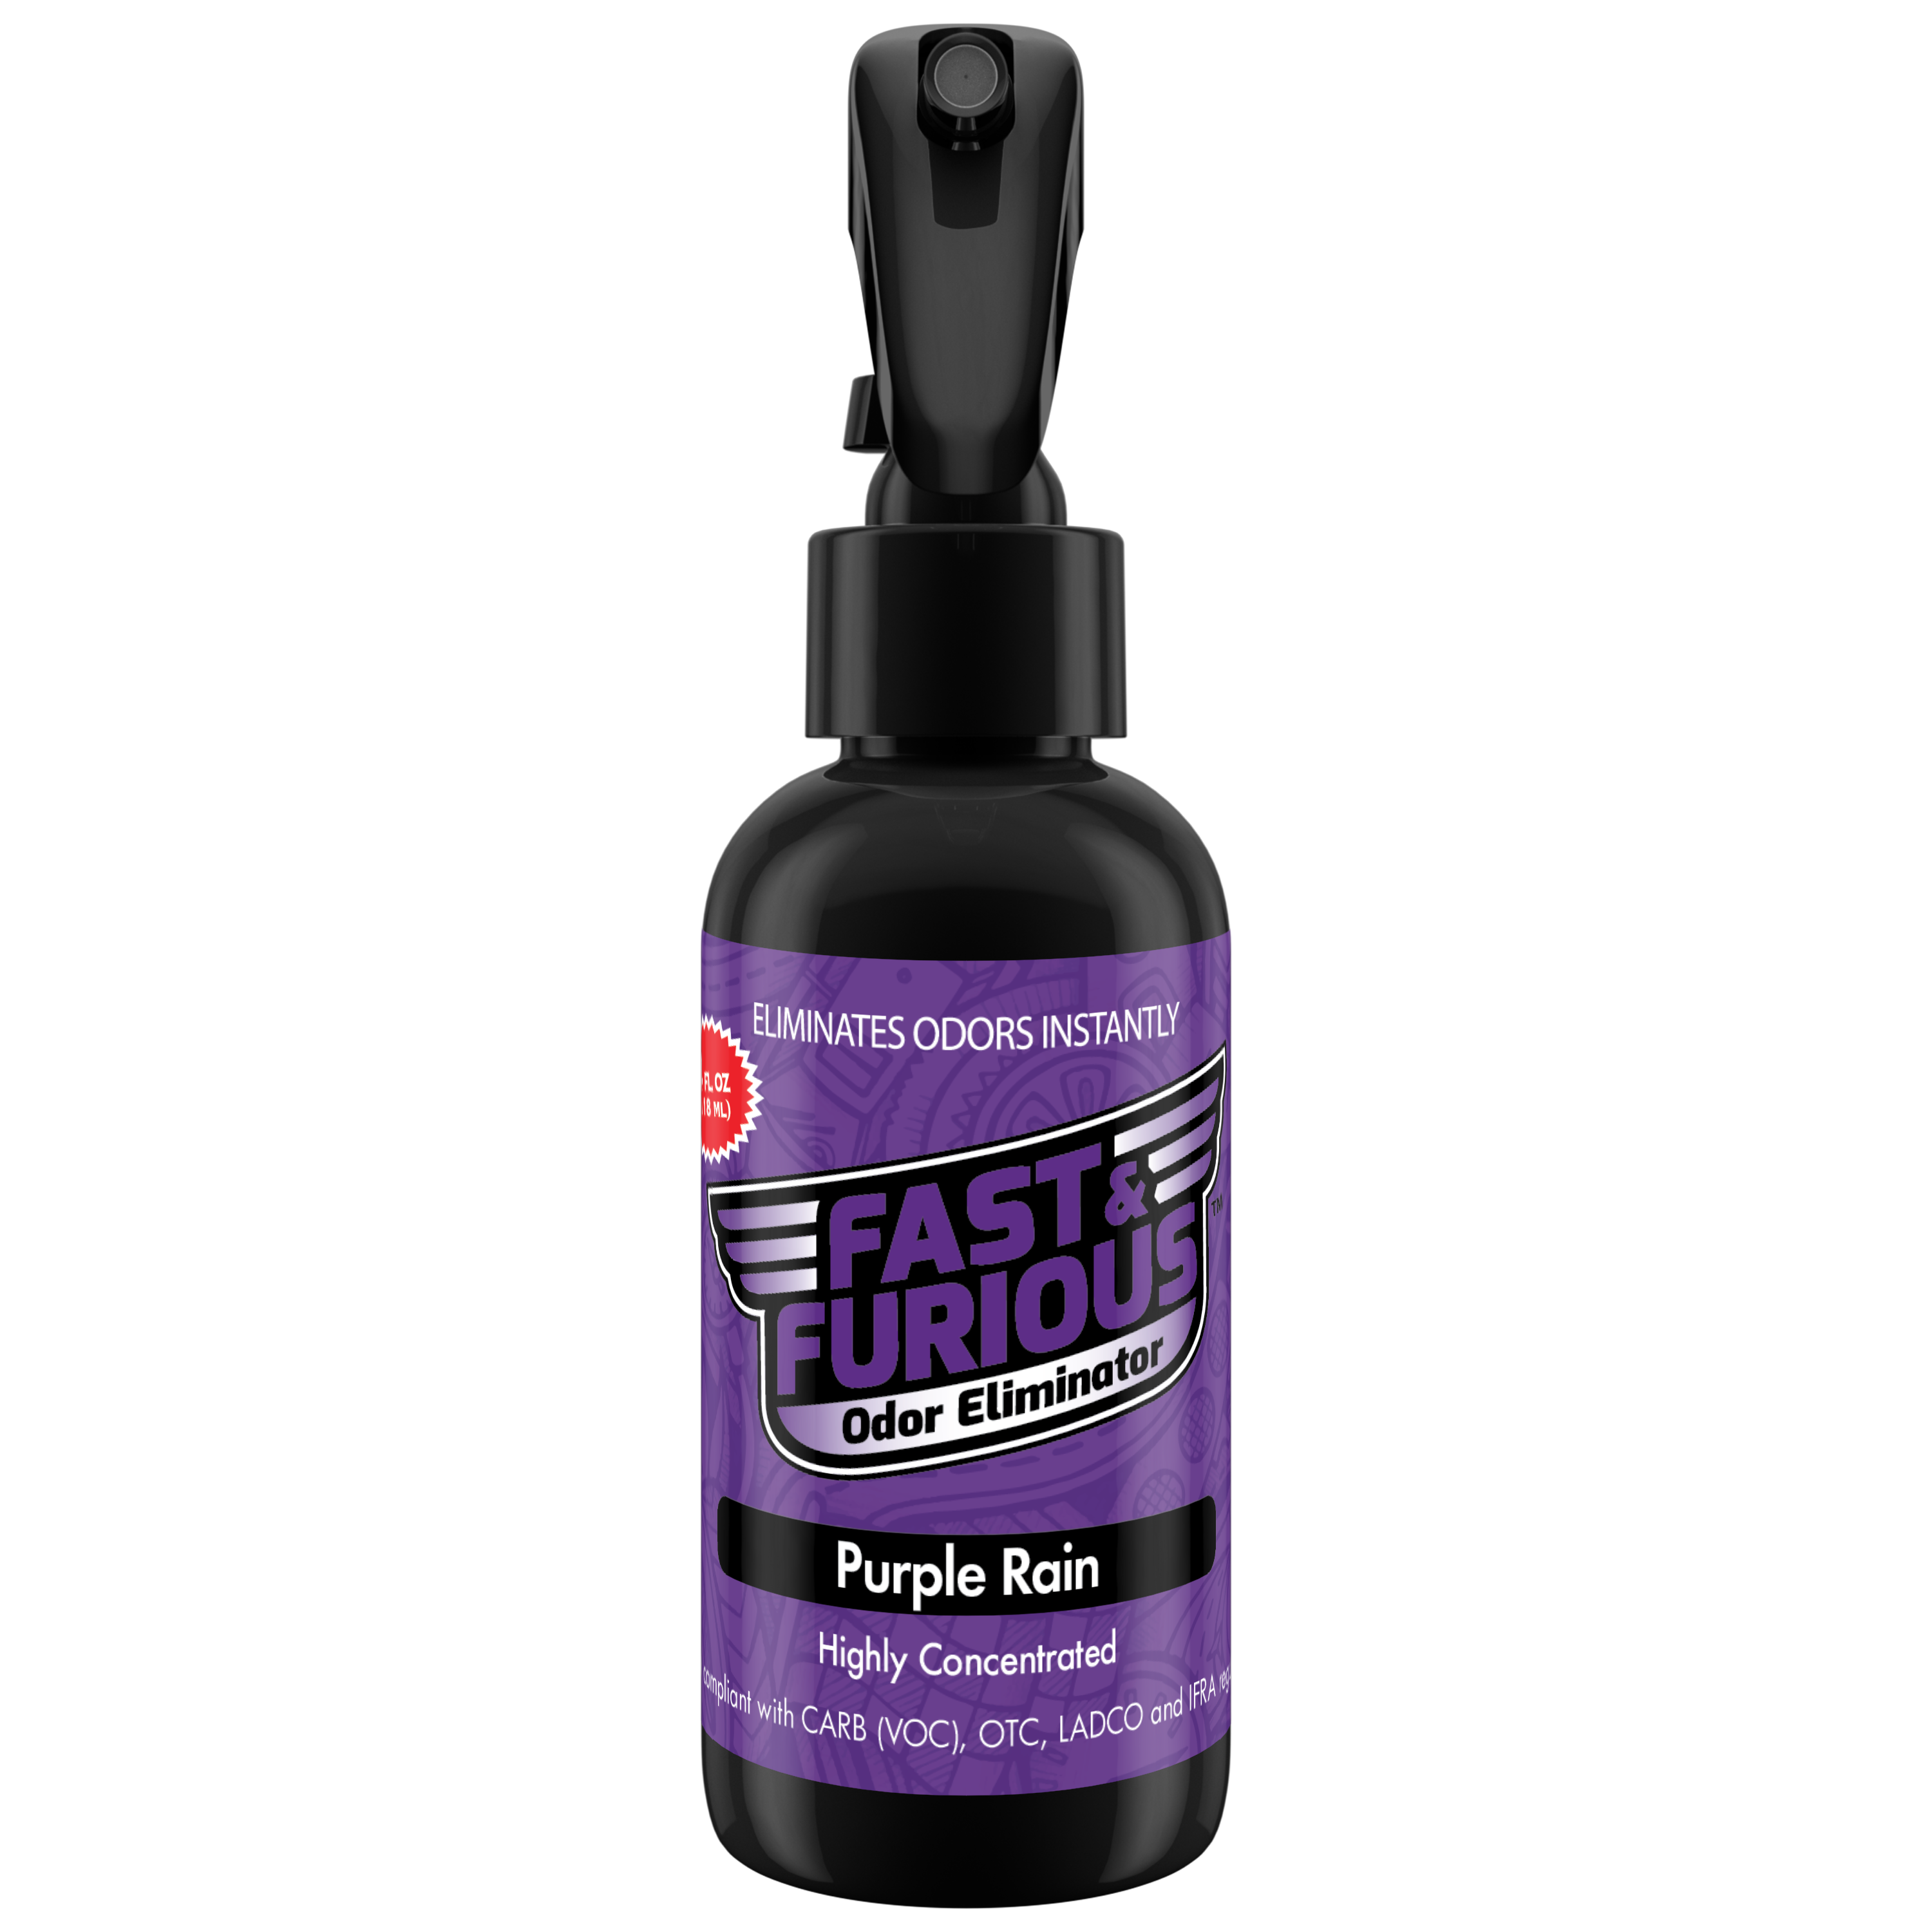 Fast and Furious Odor Eliminator - Purple Rain Scent